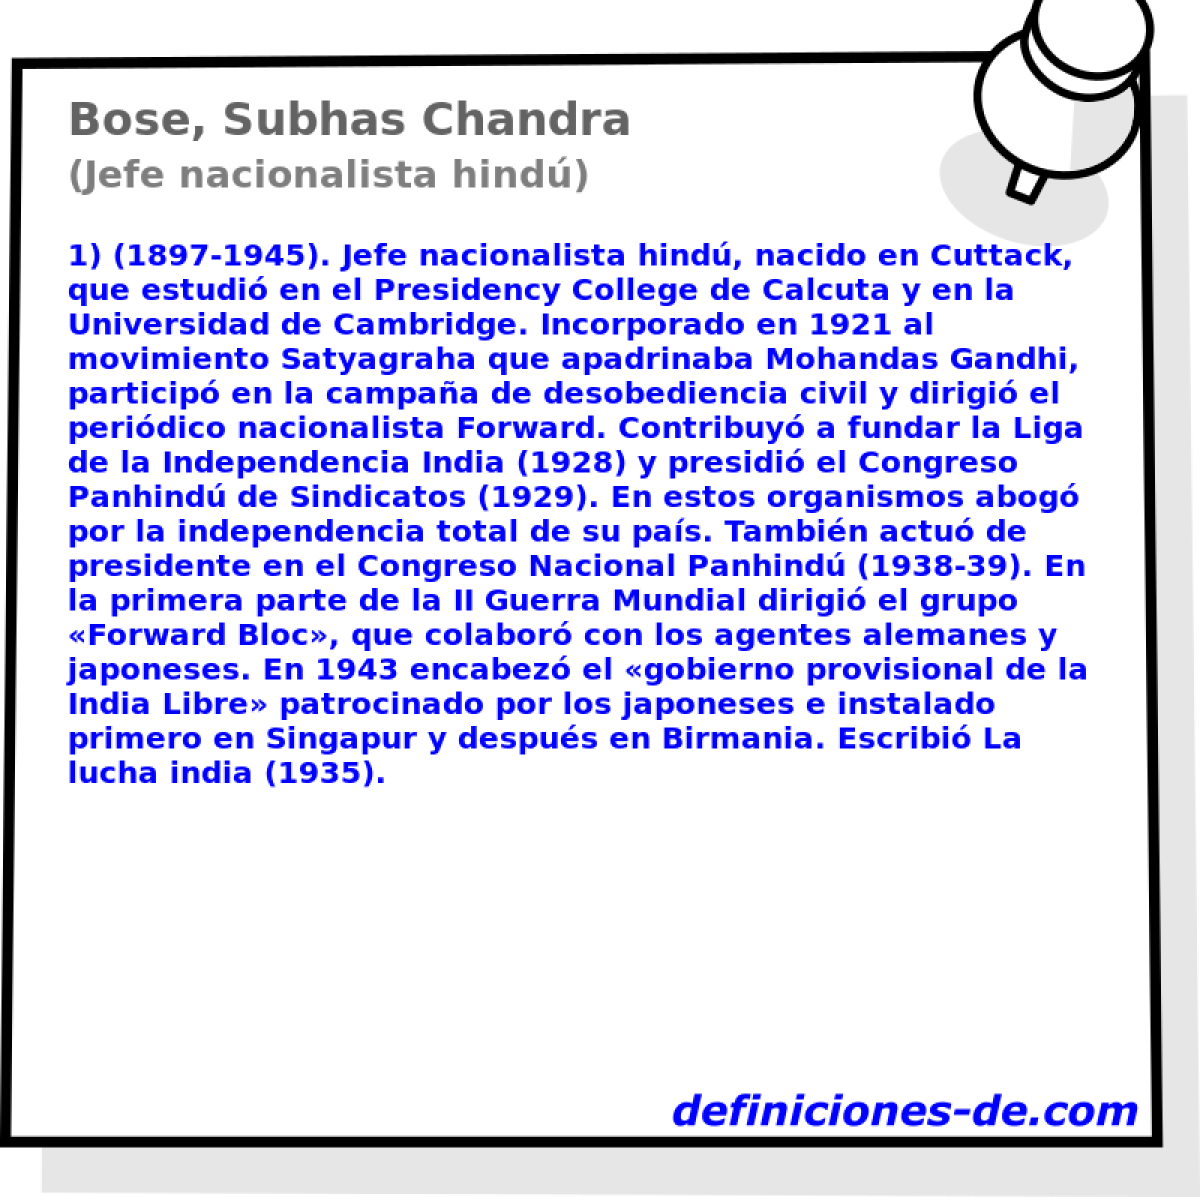 Bose, Subhas Chandra (Jefe nacionalista hind)